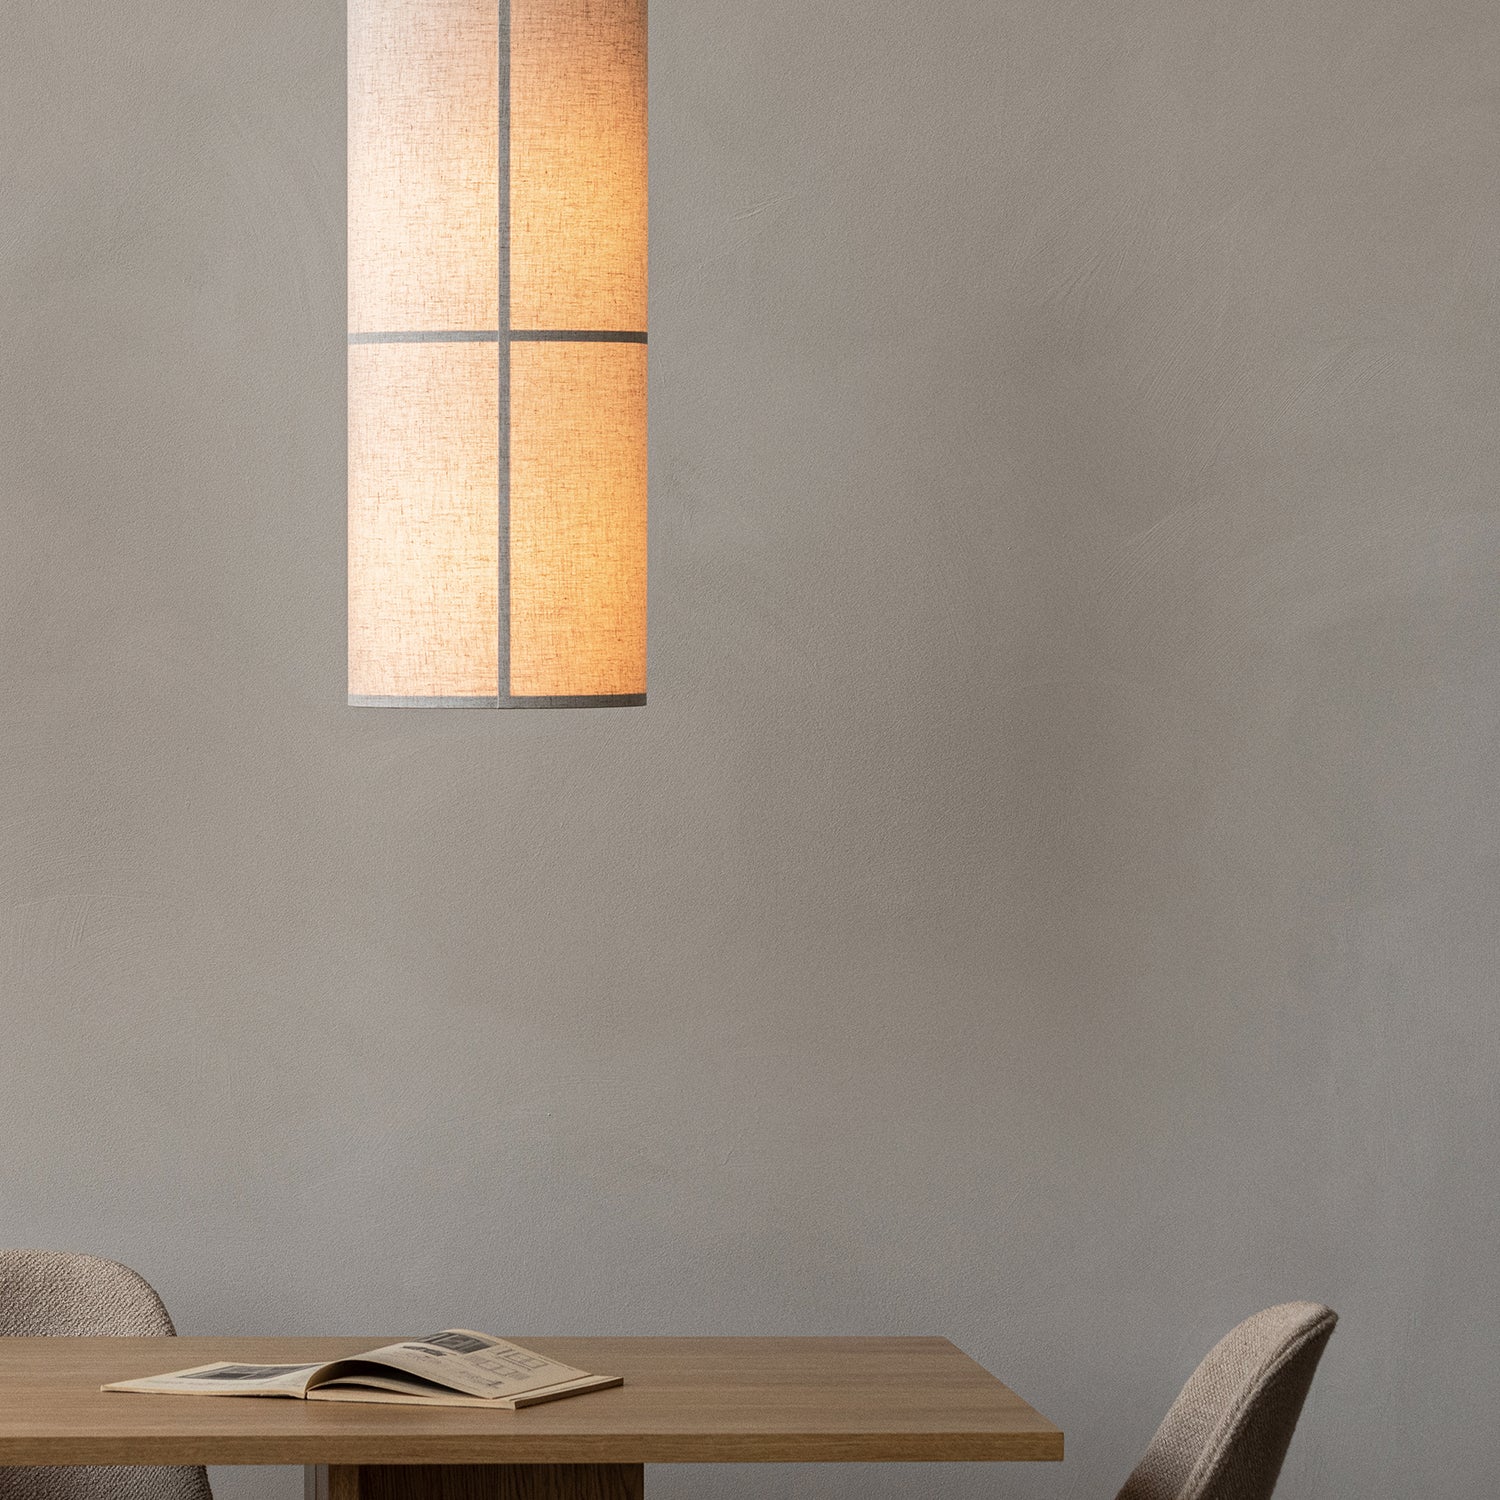 Hashira Pendant Lamp - The Design Choice